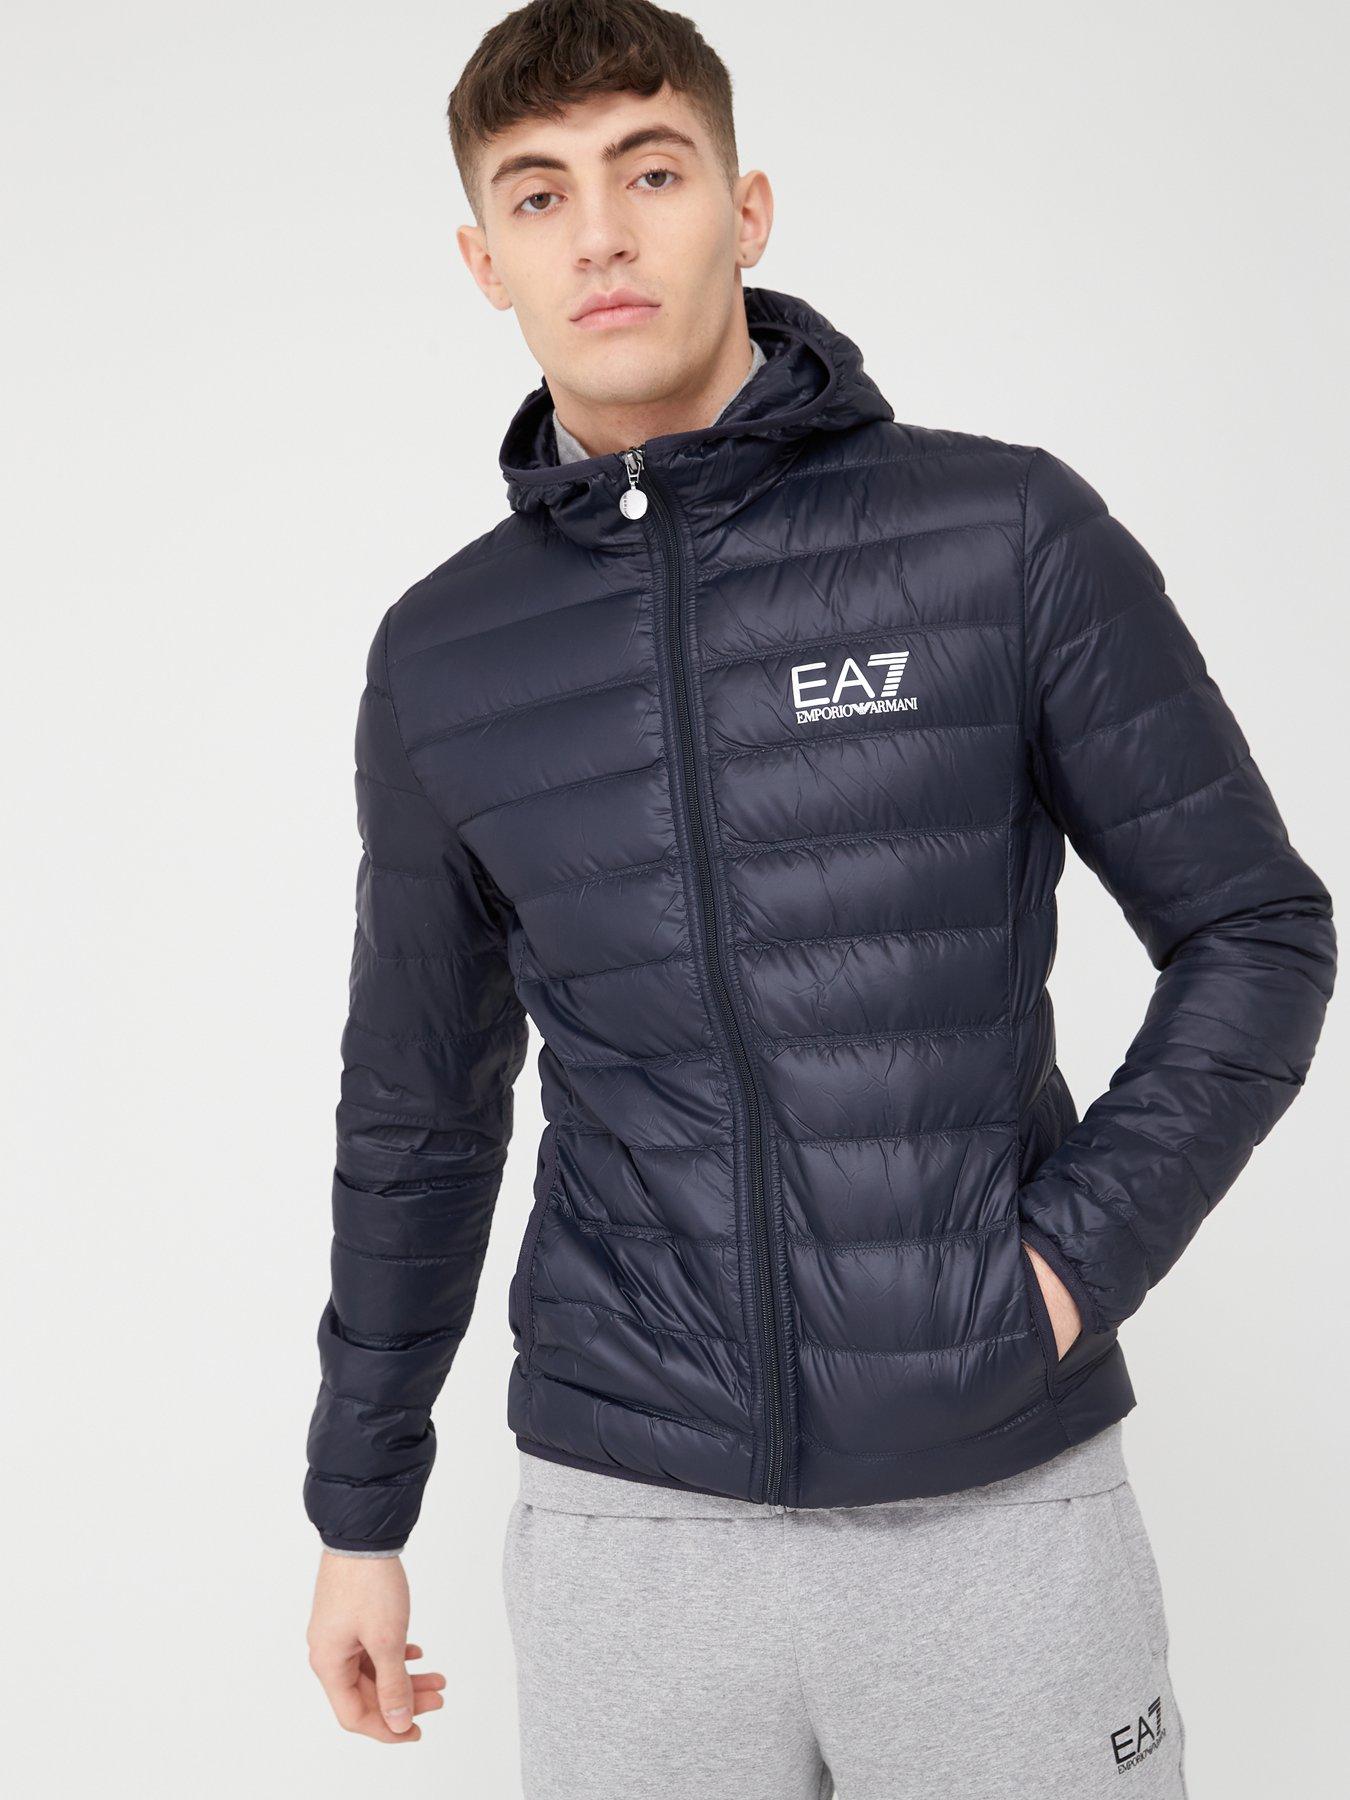 mens black ea7 jacket